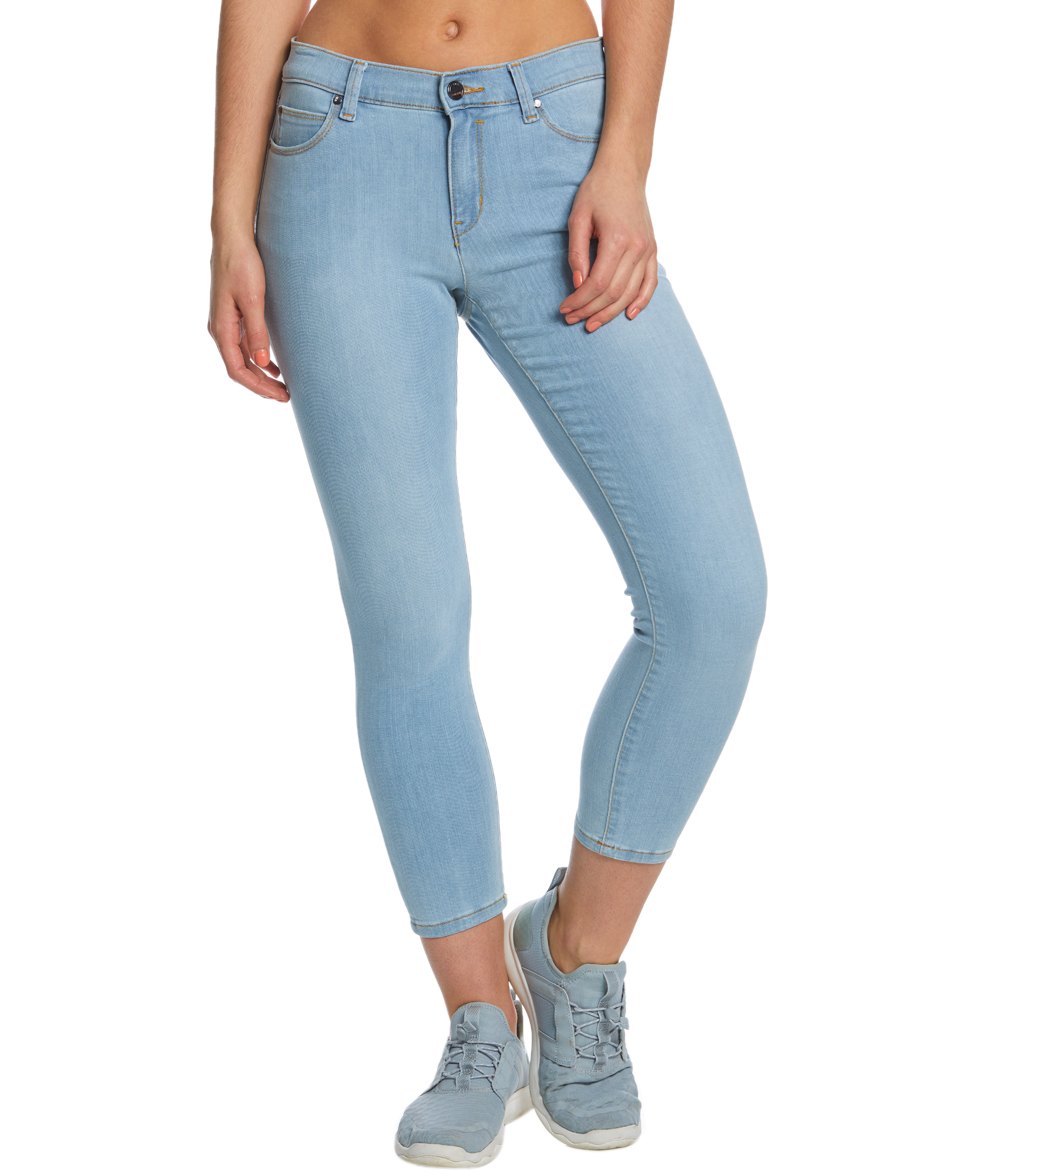 Lole Women's Skinny 7/8 Jeans - Light Blue Denim Wash 29 Cotton/Polyester - Swimoutlet.com